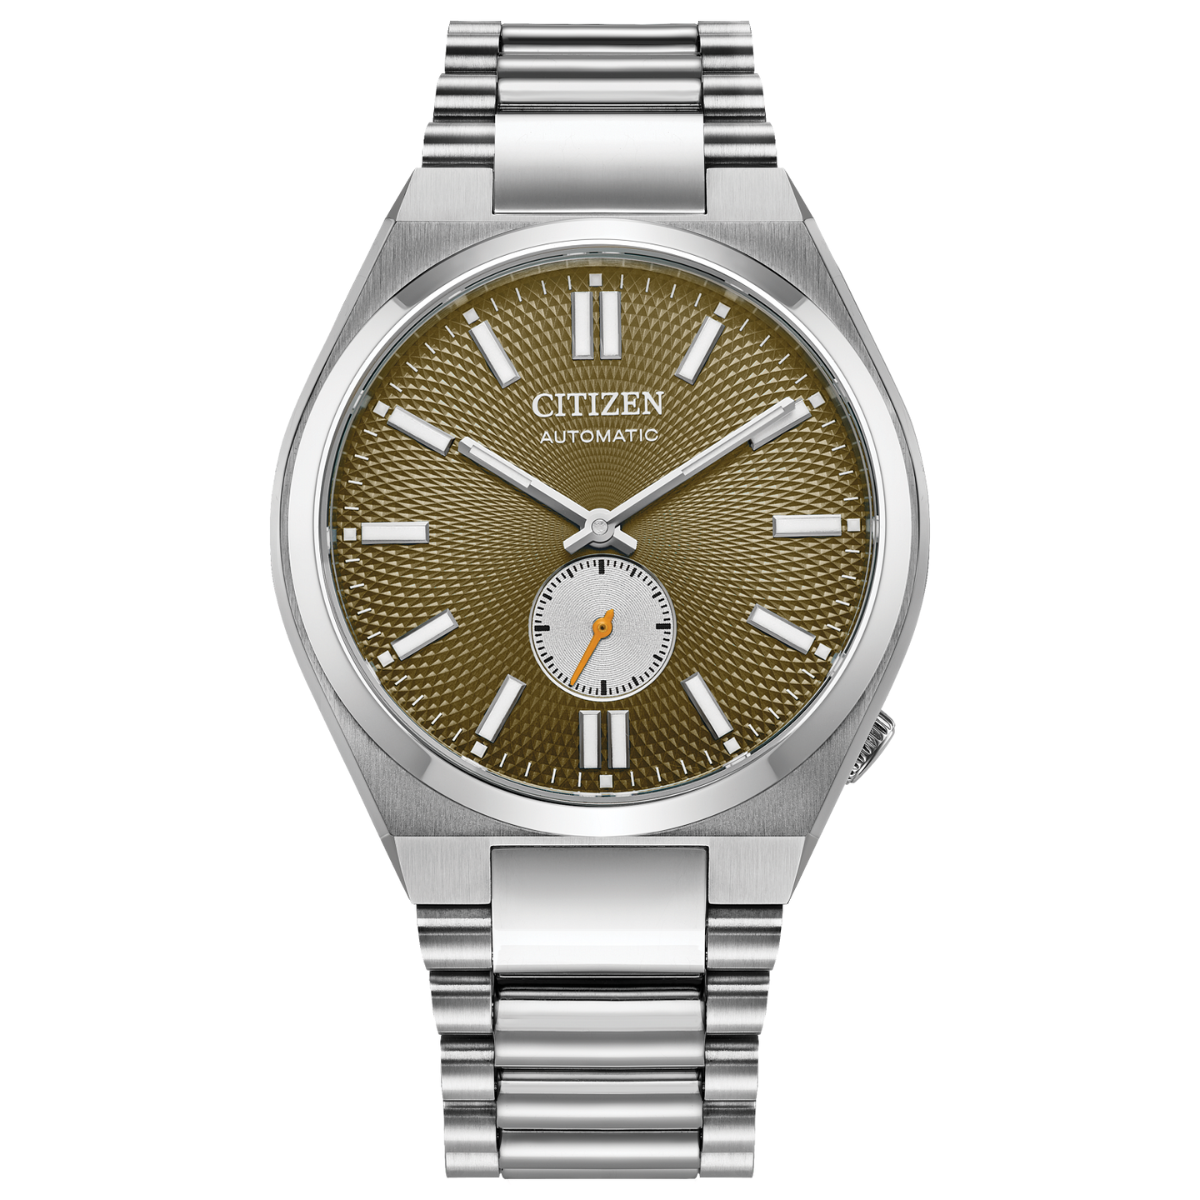 Citizen “TSUYOSA” Small Second Automatic Men's Watch NK5010-51X